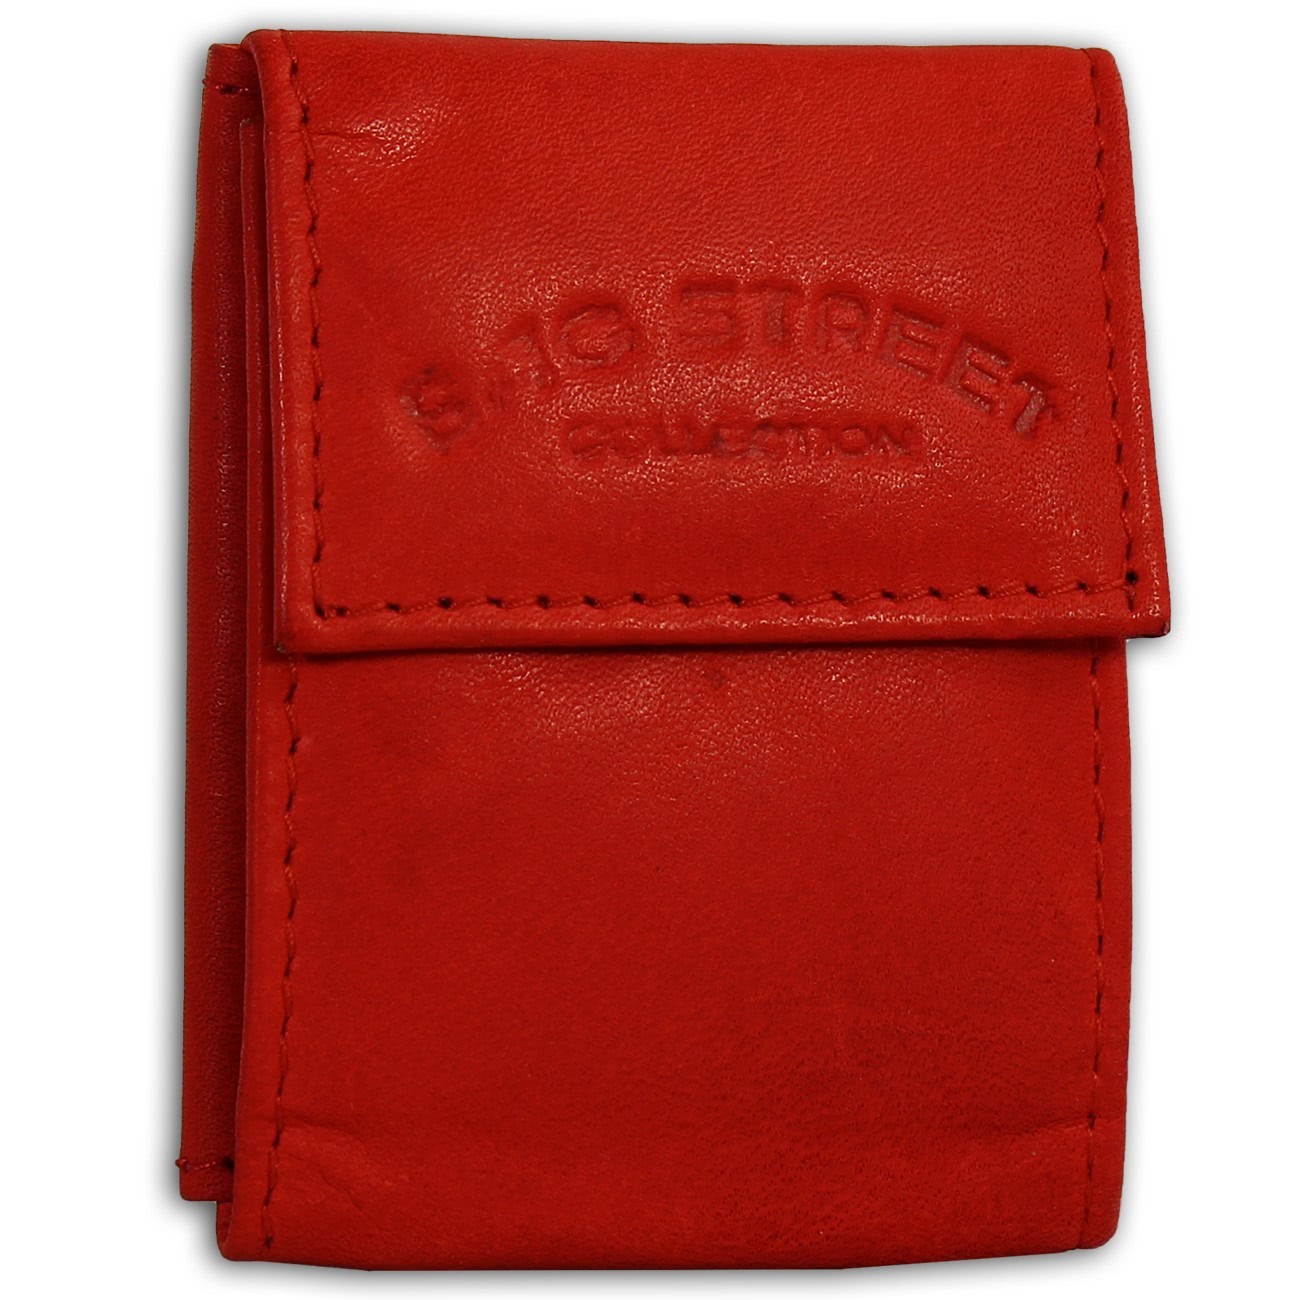 Bag Street kompakte Minibörse echtes Leder Geldbörse Portemonnaie rot OPJ801R